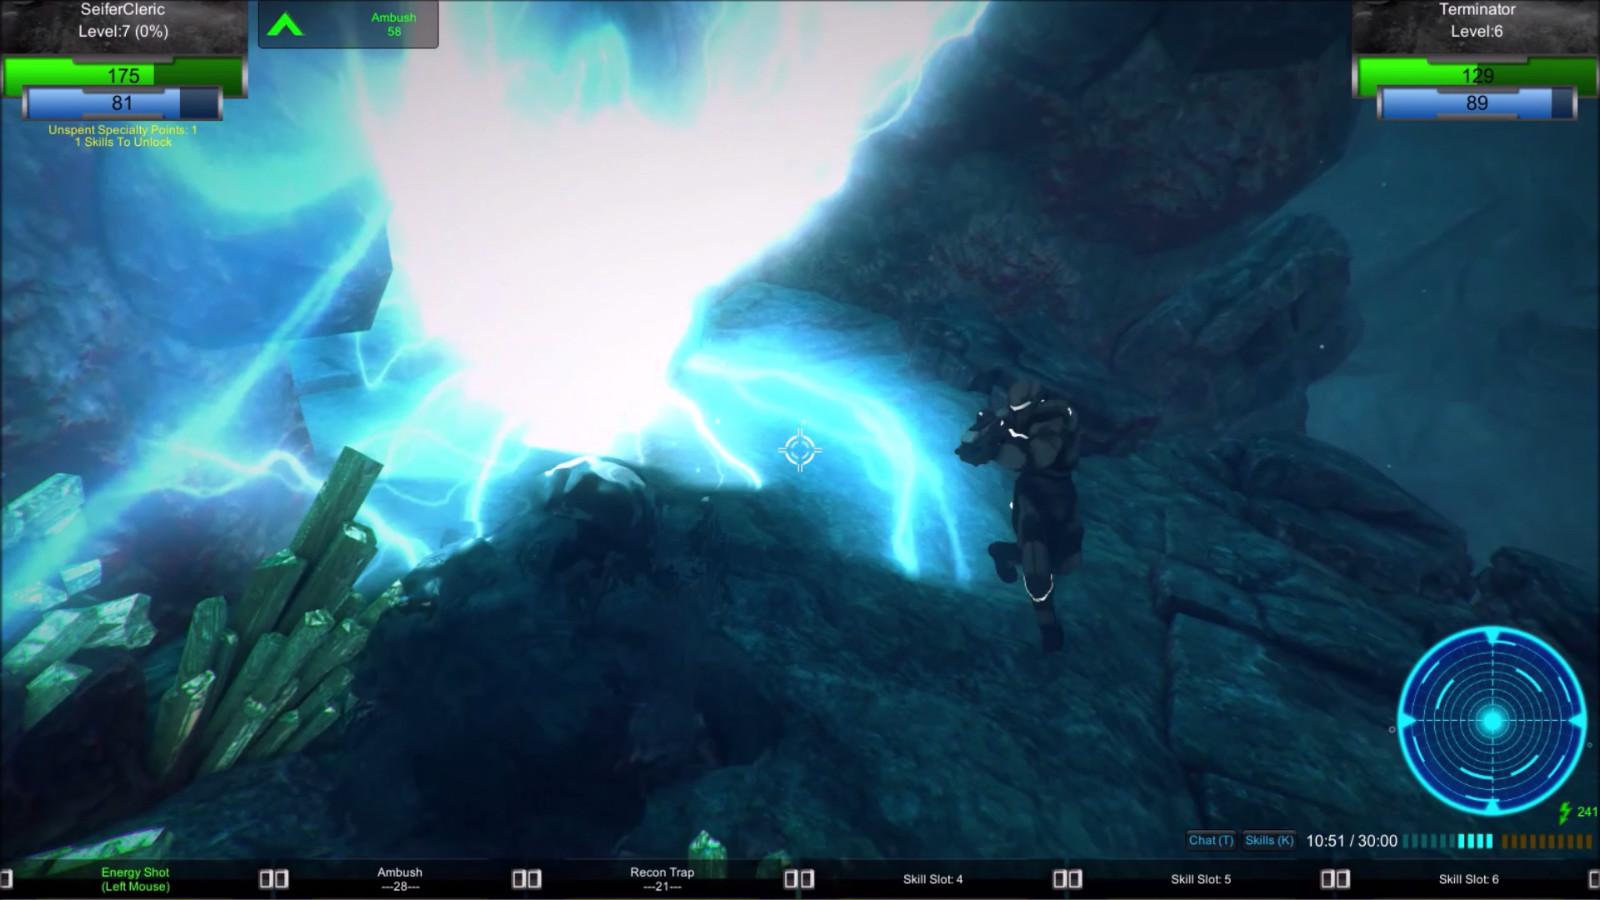 Screenshot №7 from game CLASH